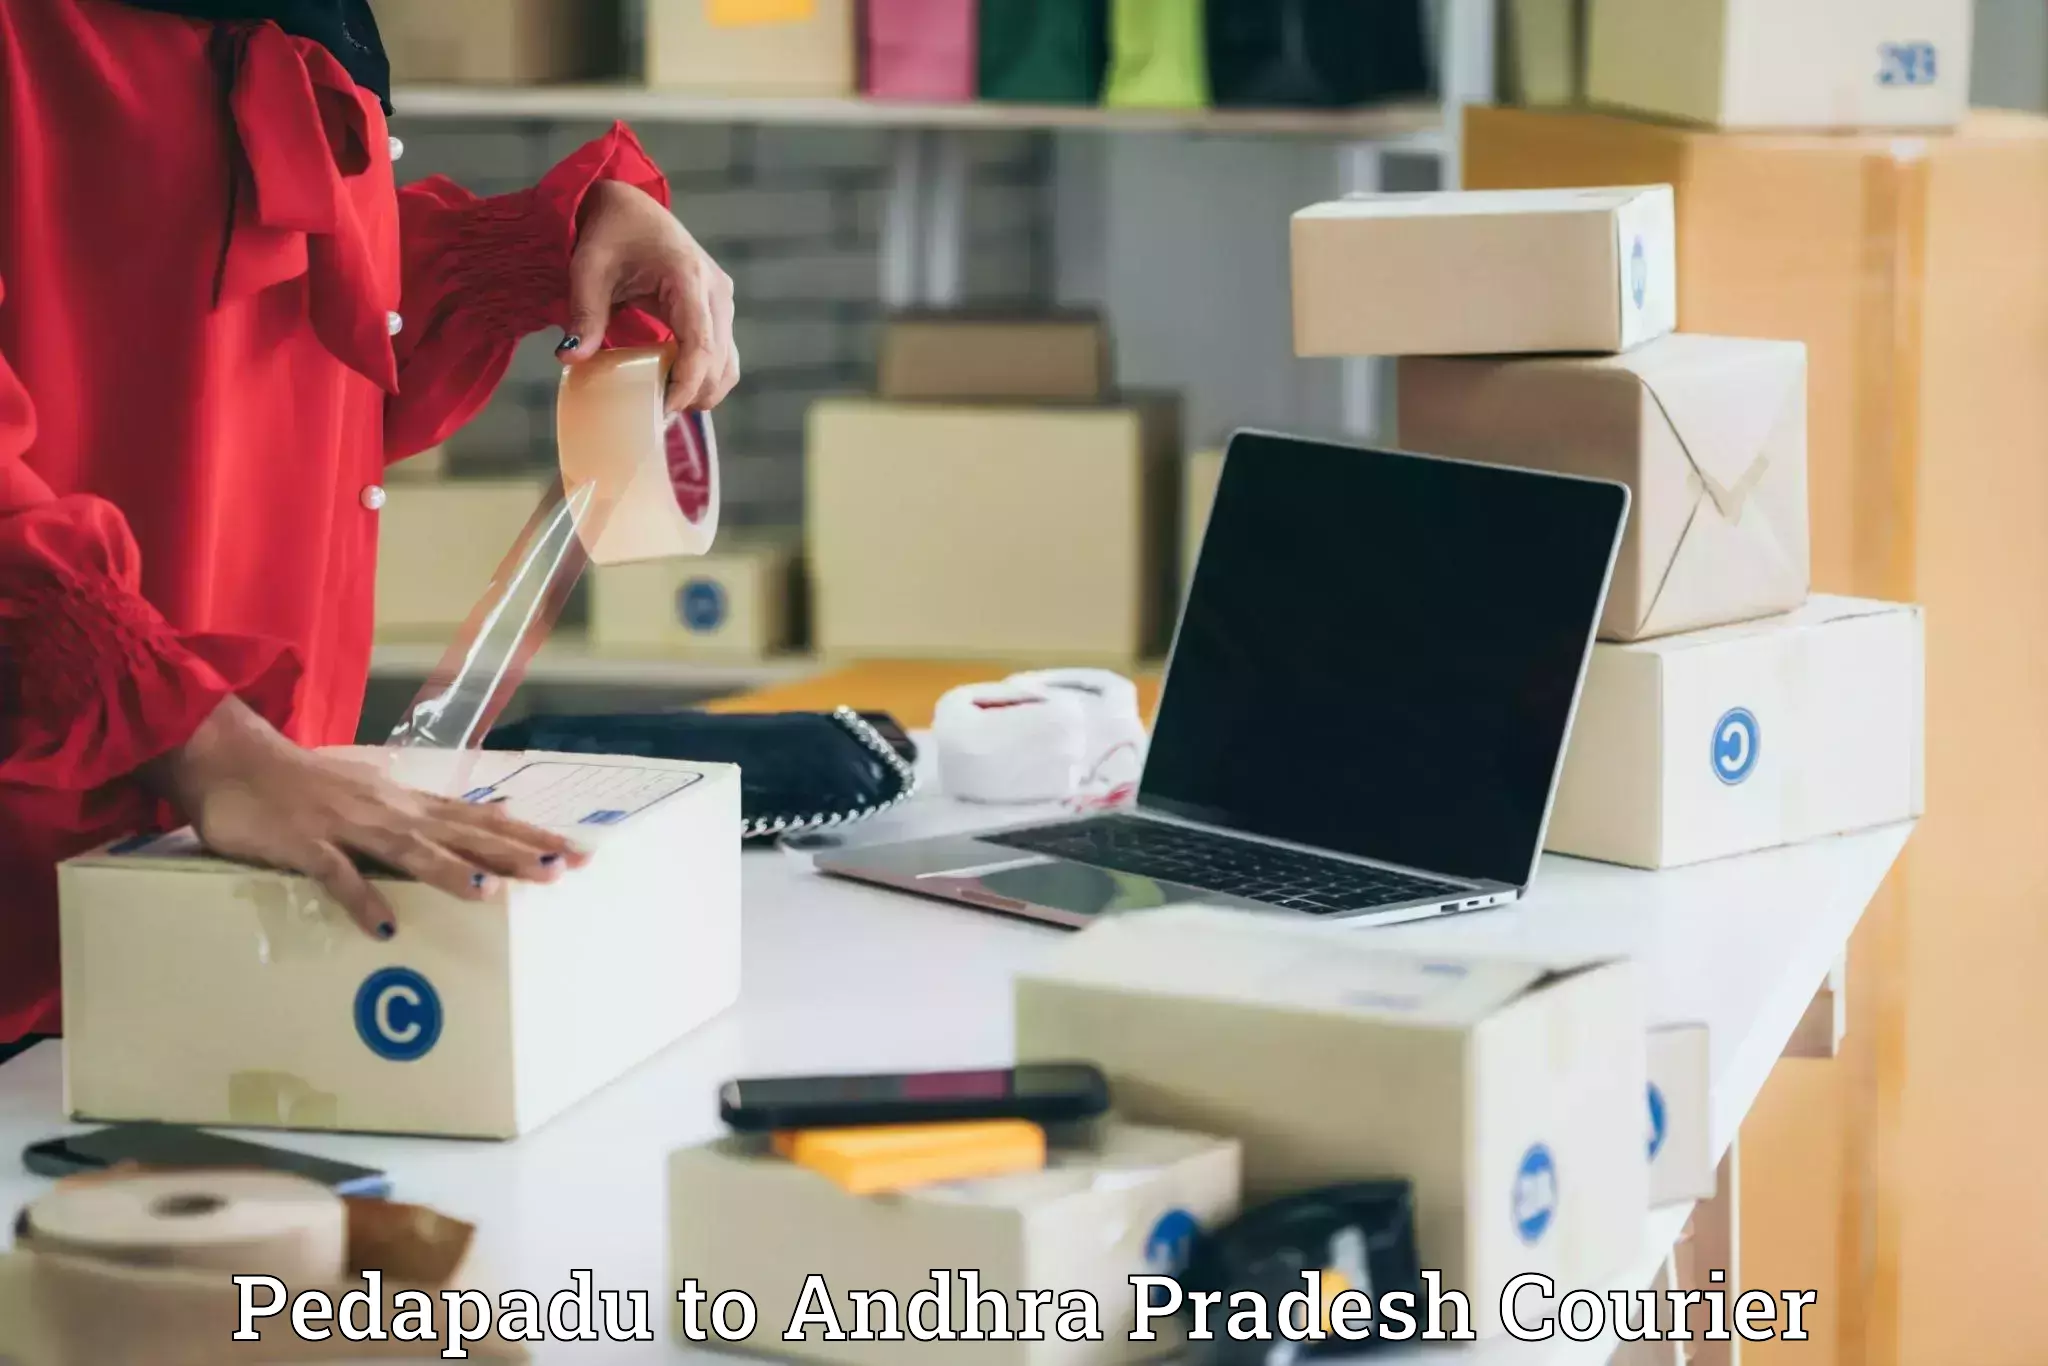 Courier service efficiency Pedapadu to Tirupati